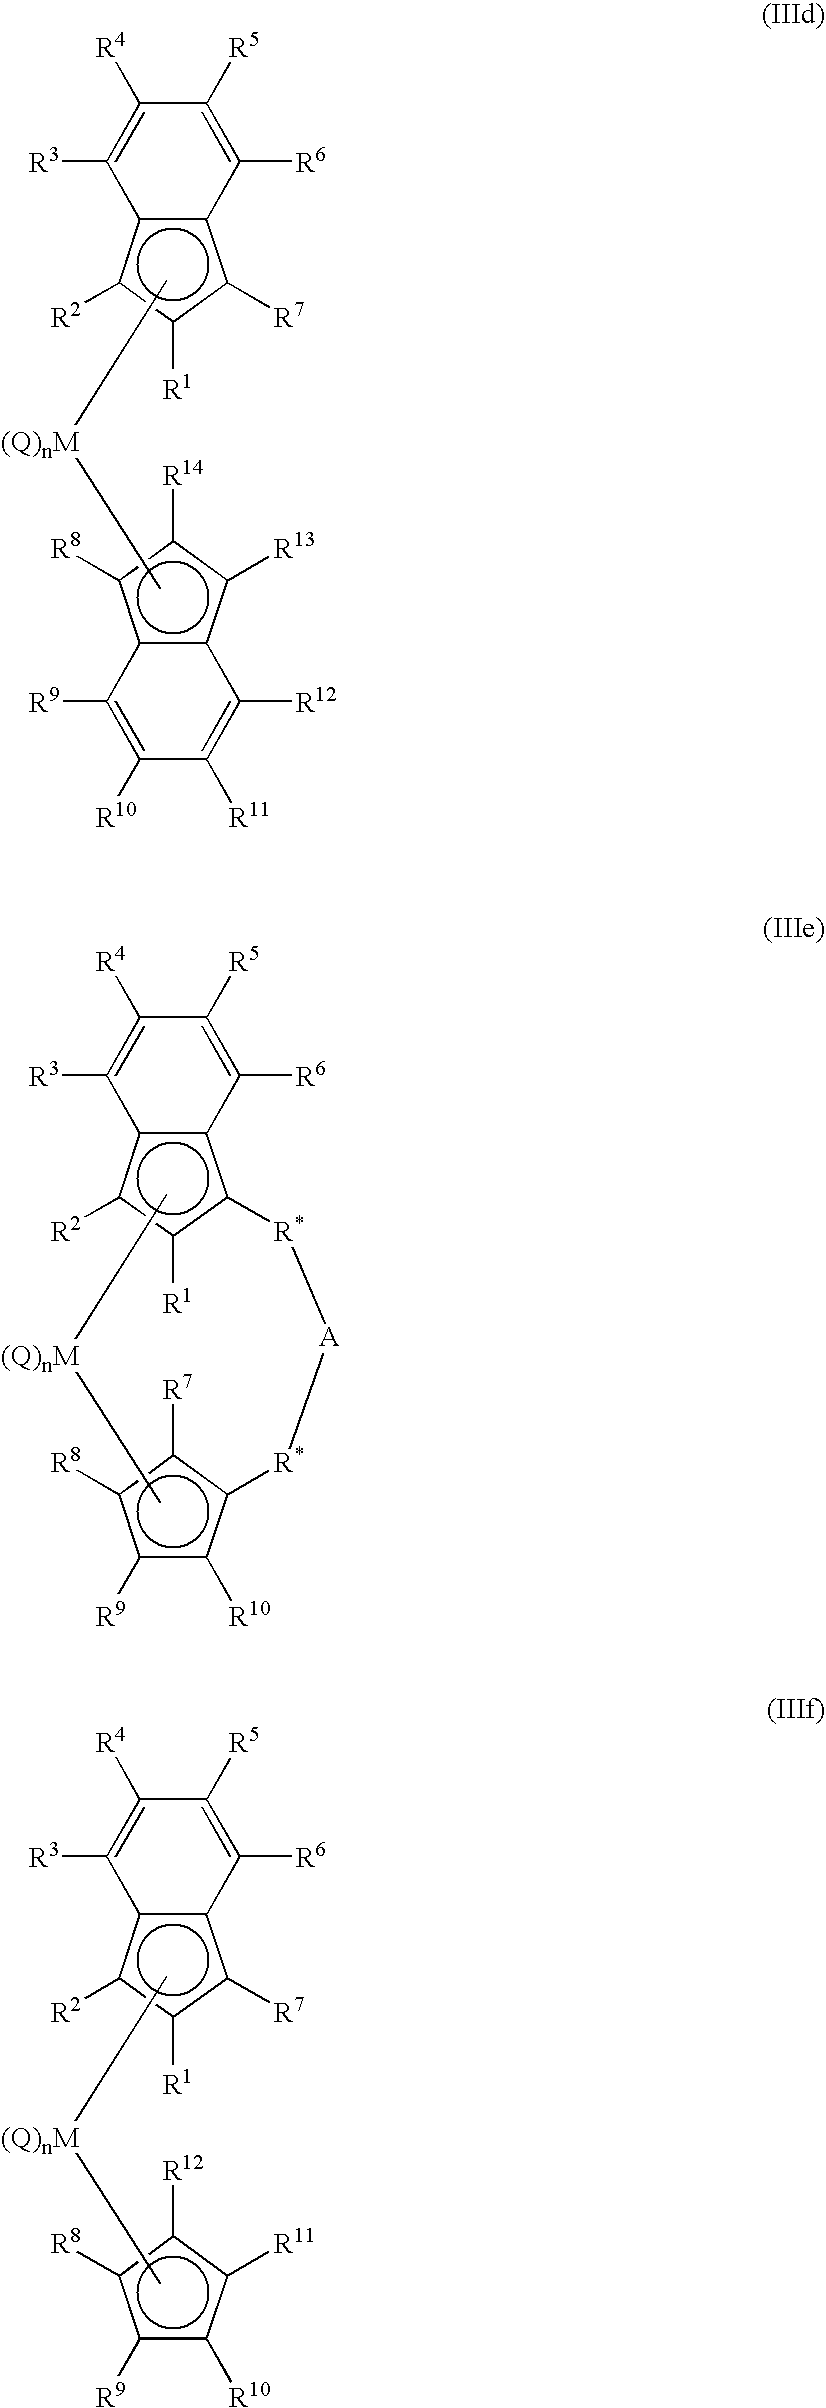 Polymerization process using a metallocene catalyst system